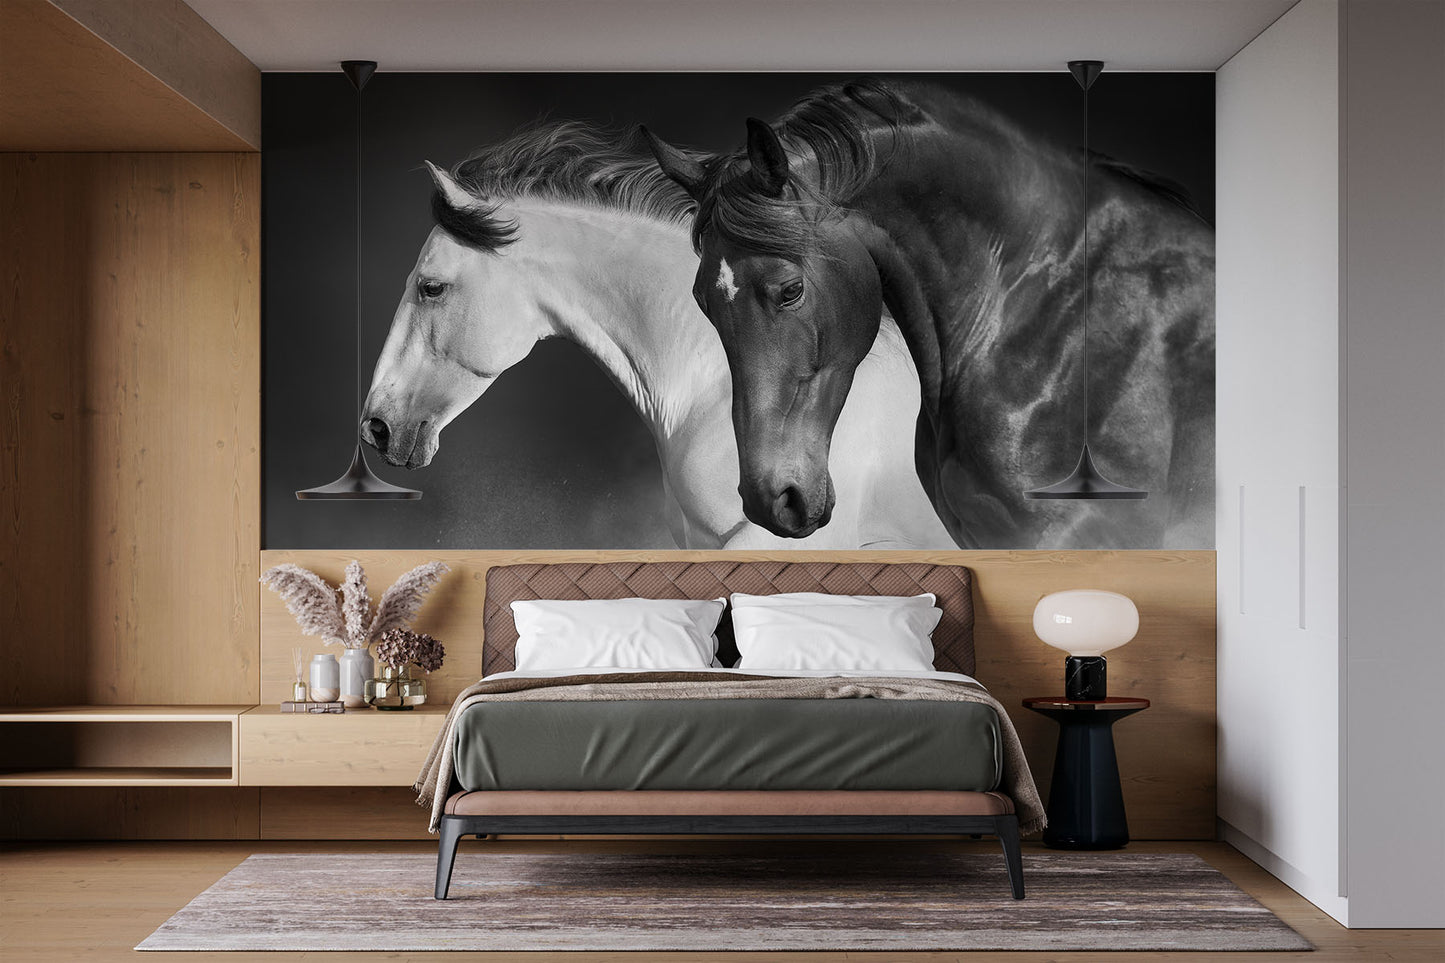 Horses Running Animals Black&White Wallpaper Mural,Self-Adhesive Peel And Stick 3D Wall Art,Designer Bedroom Wall Decor